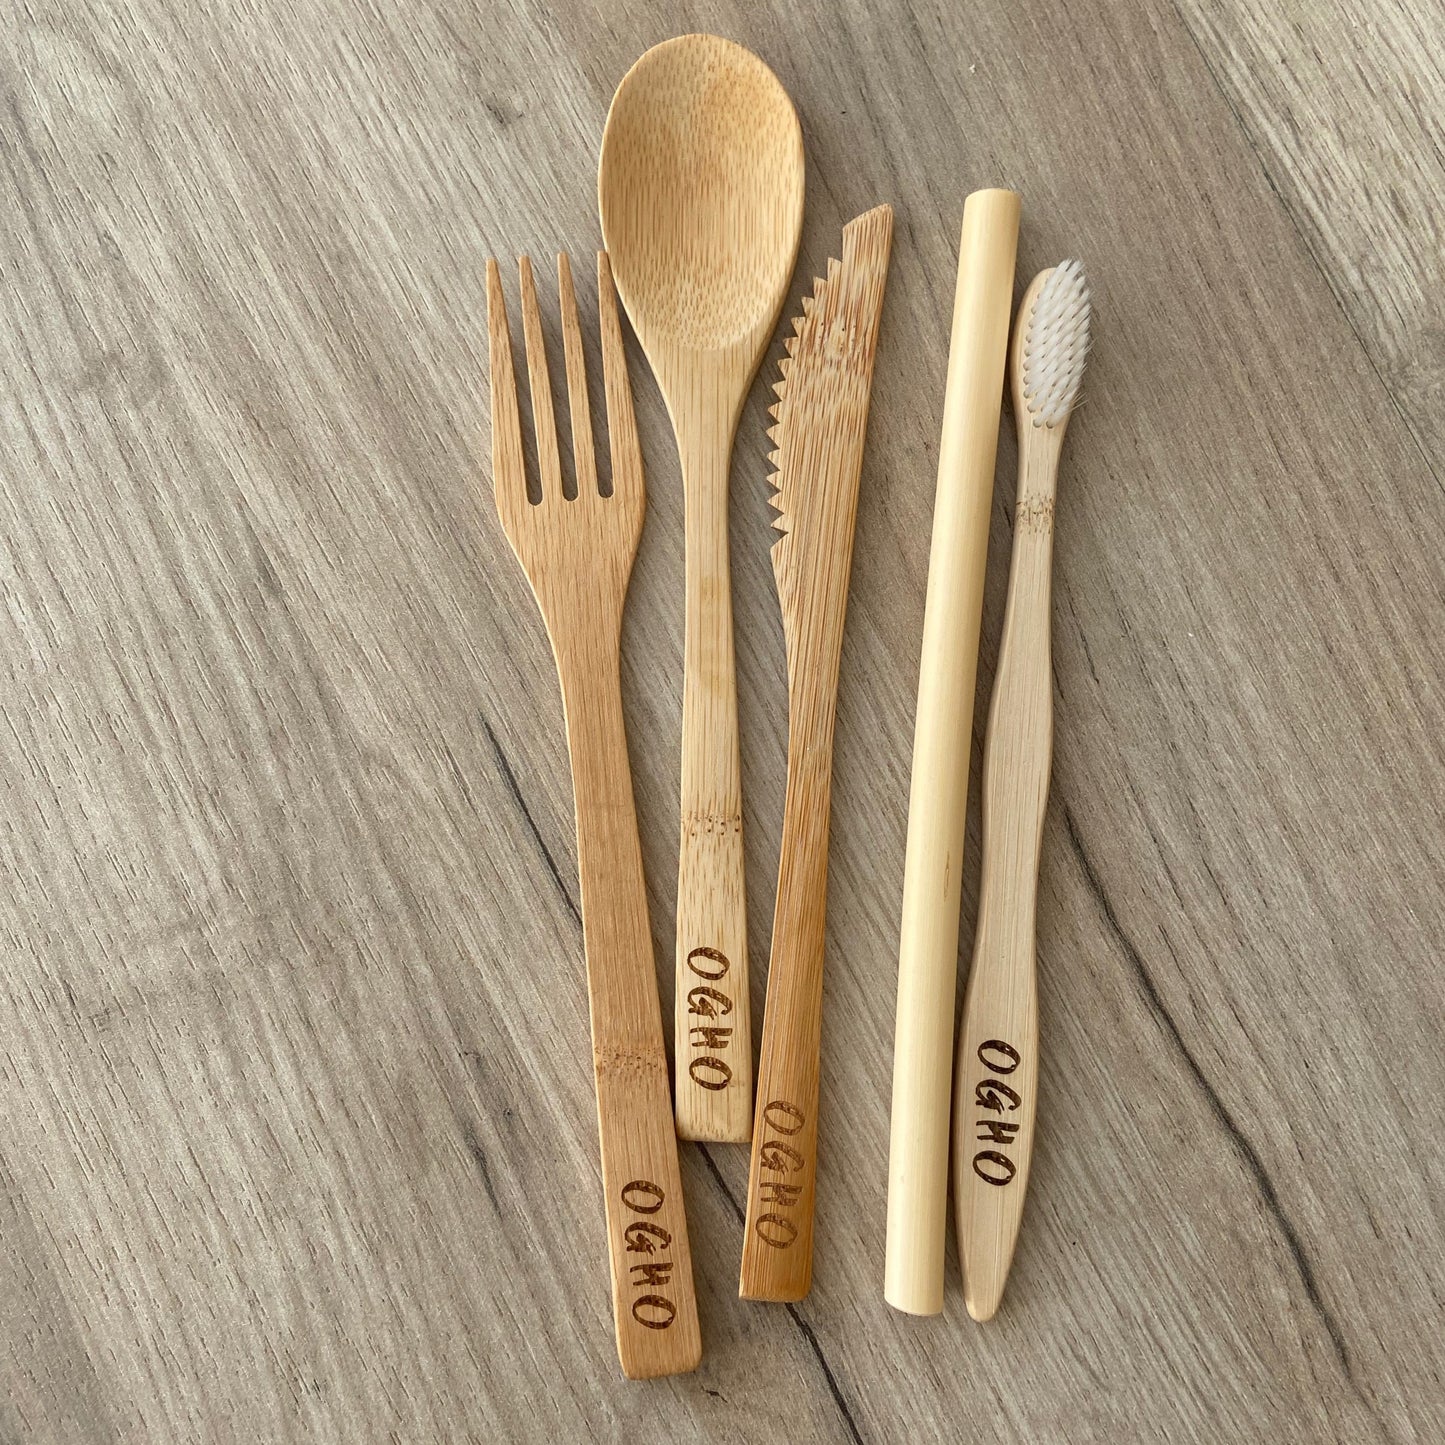 Ogho cutlery set - Bamboo